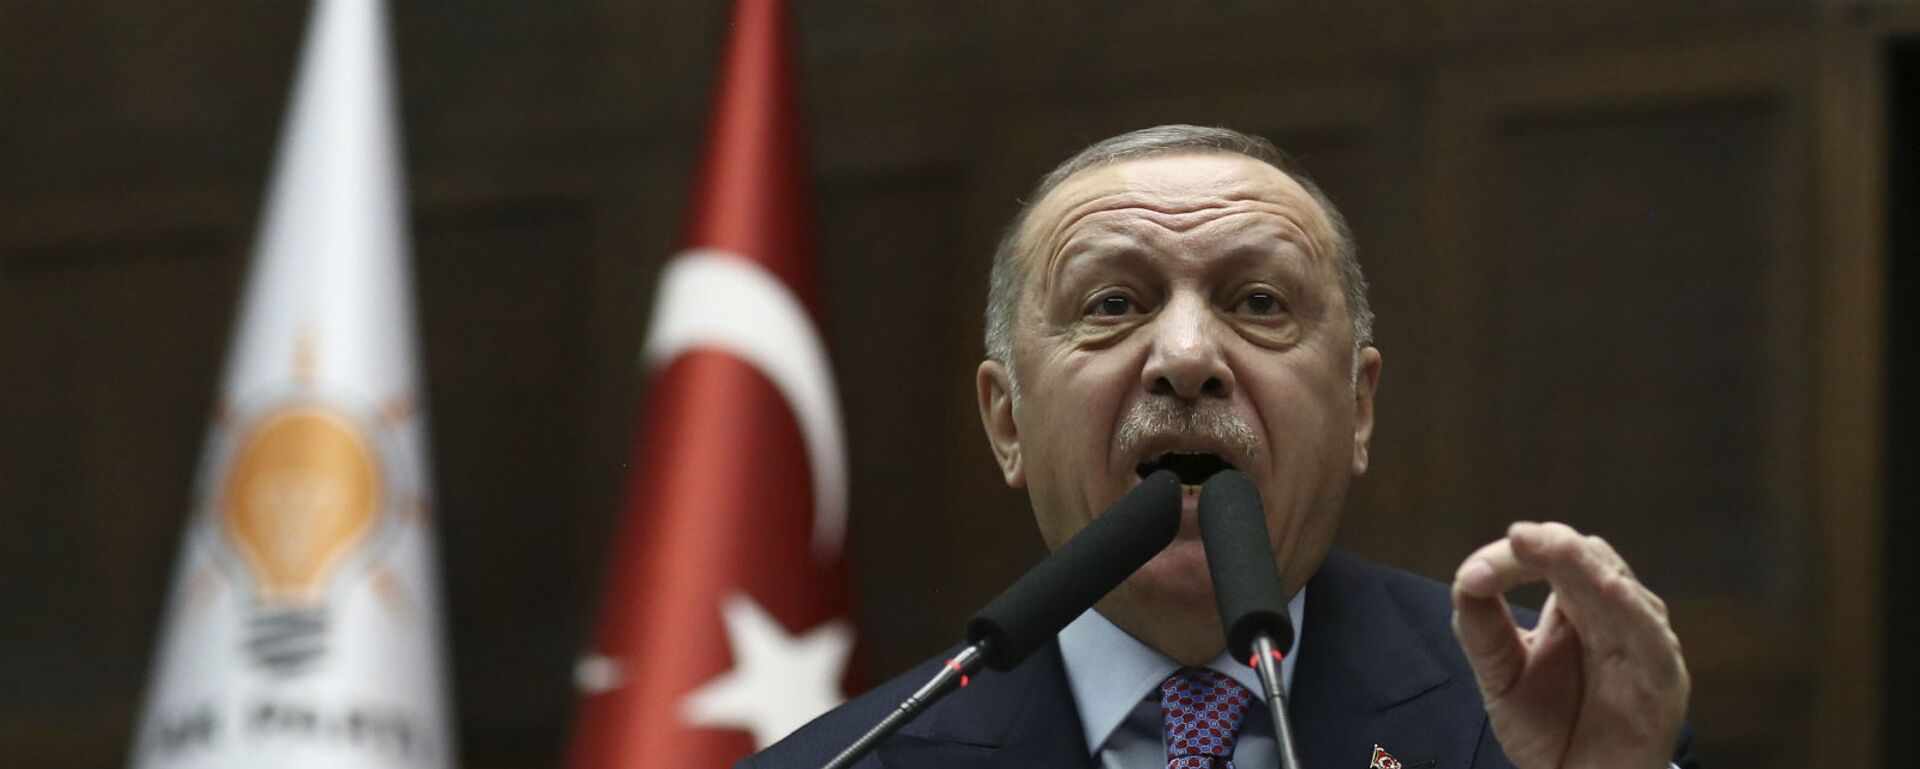 Президент Турции Реджеп Тайип Эрдоган в парламенте (26 февраля 2020). Анкара - Sputnik Армения, 1920, 07.04.2021